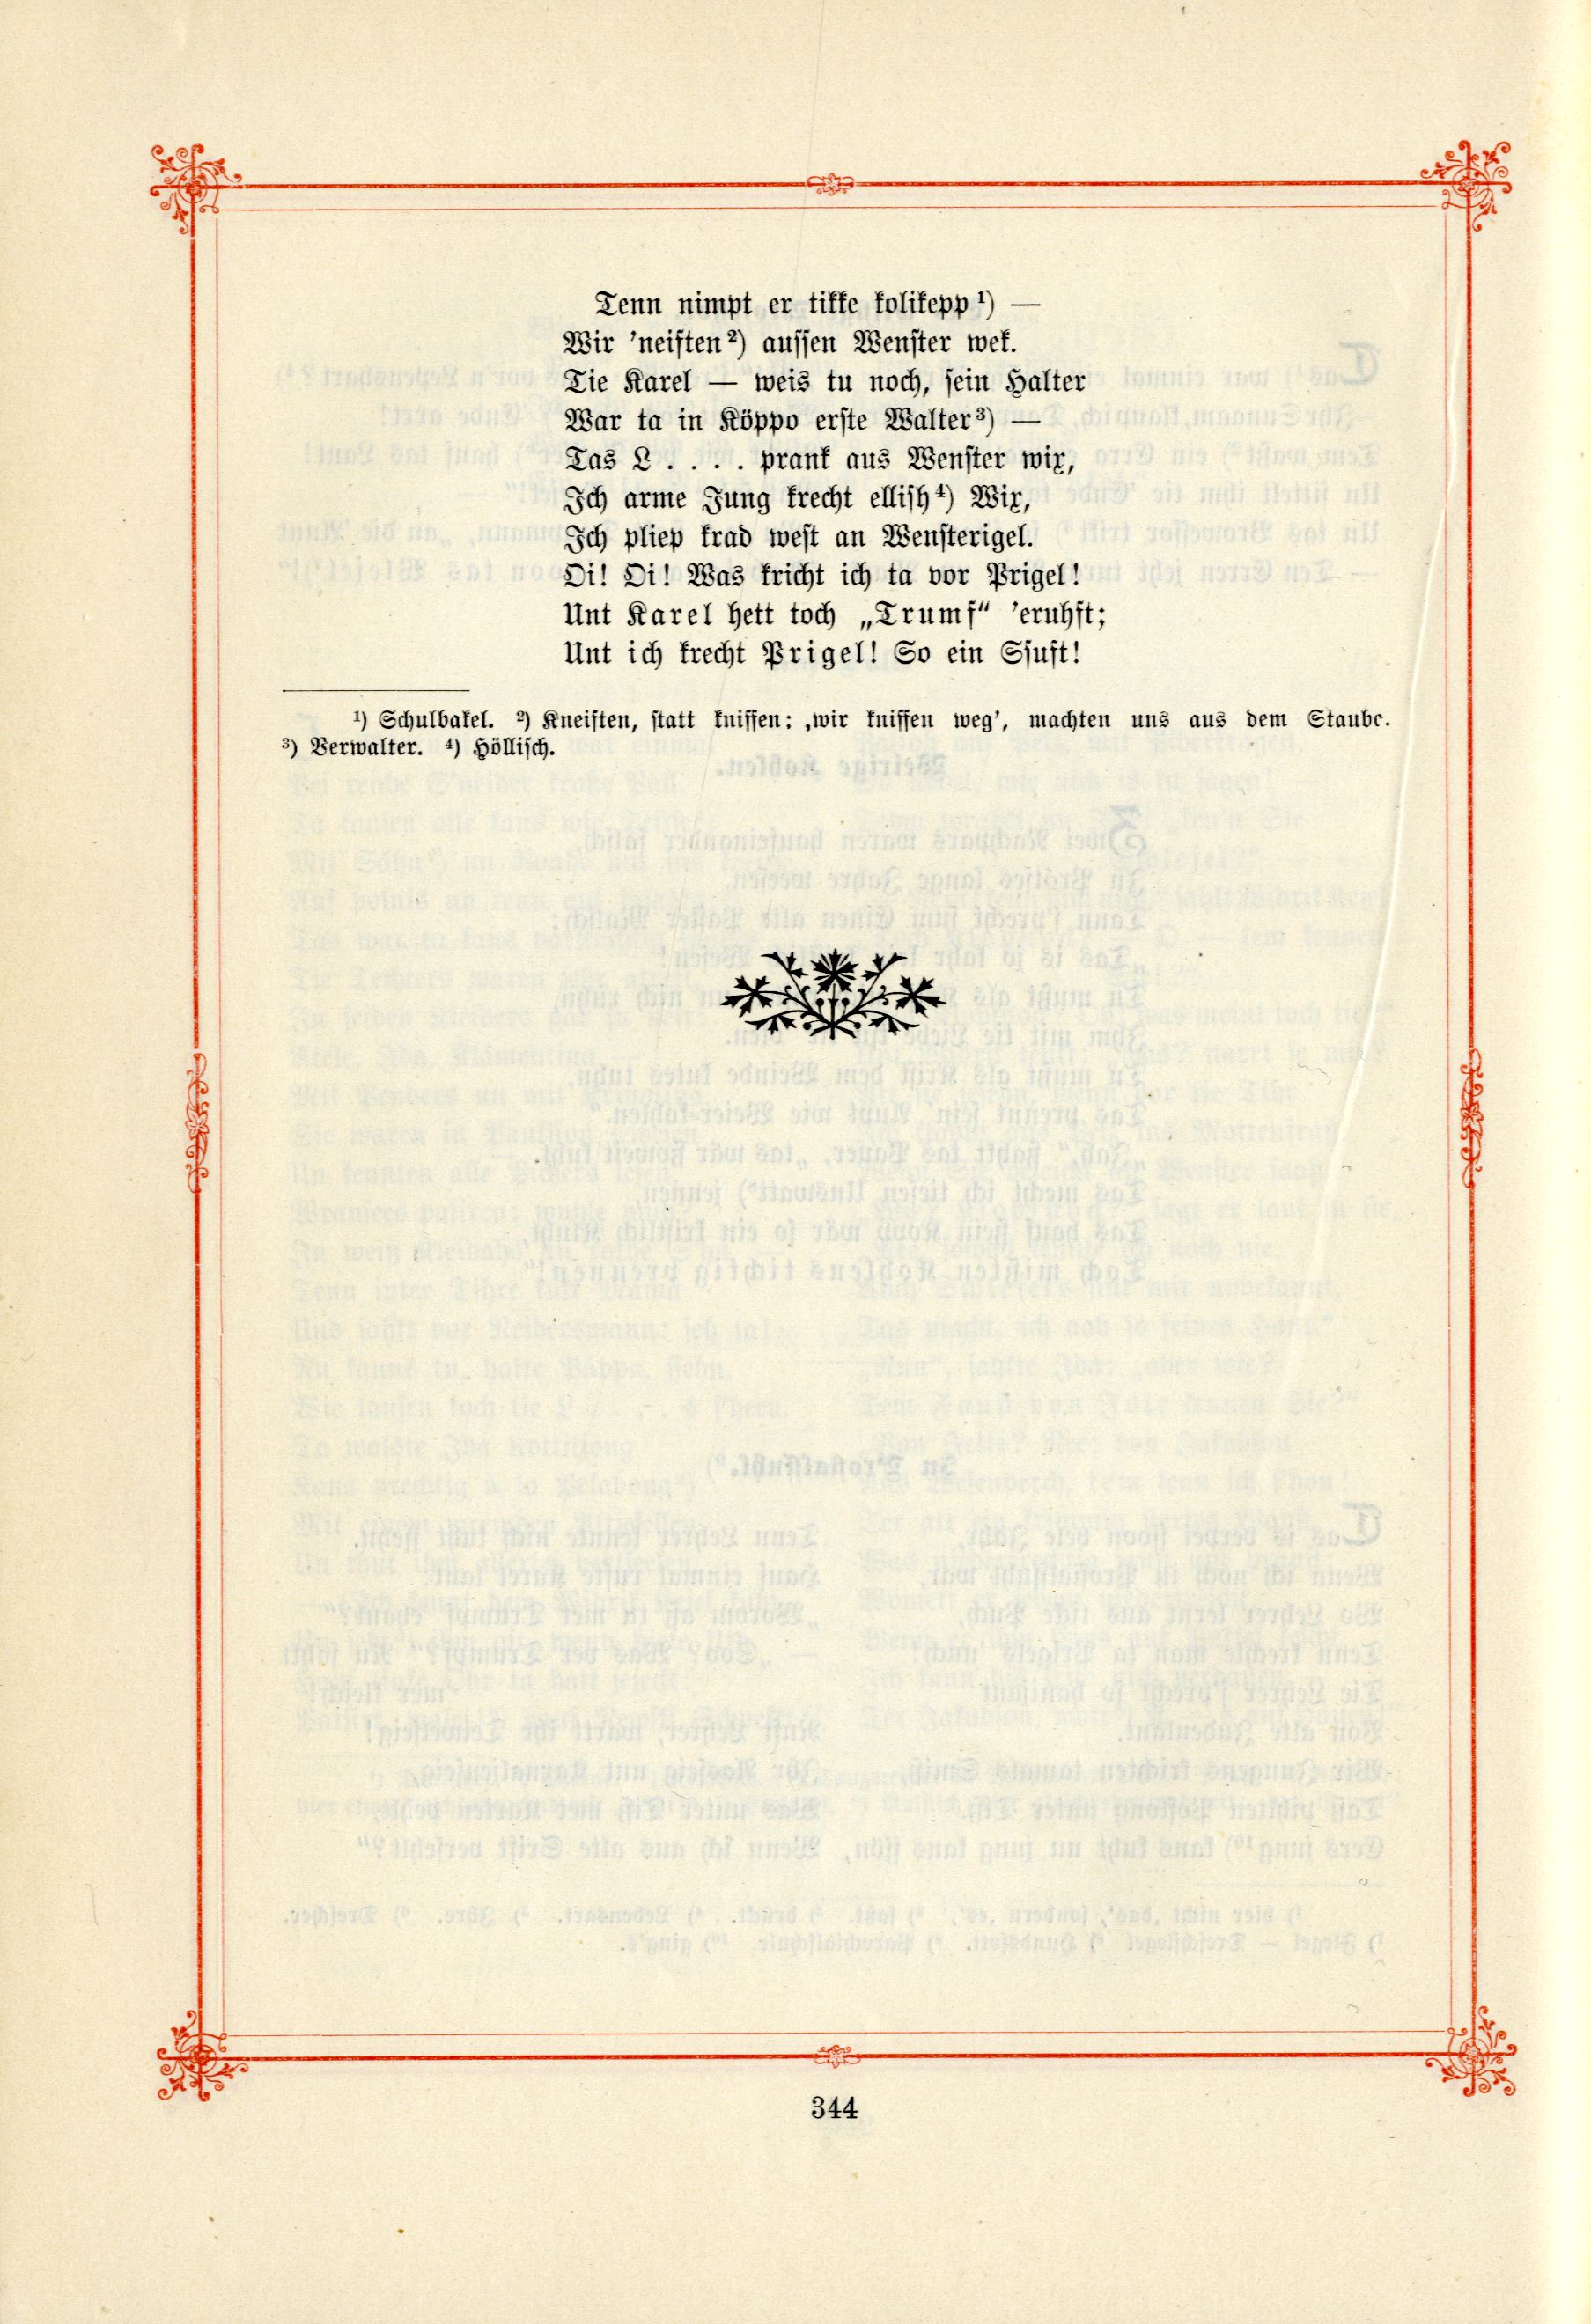 In Prosialssuhl (1895) | 2. (344) Main body of text